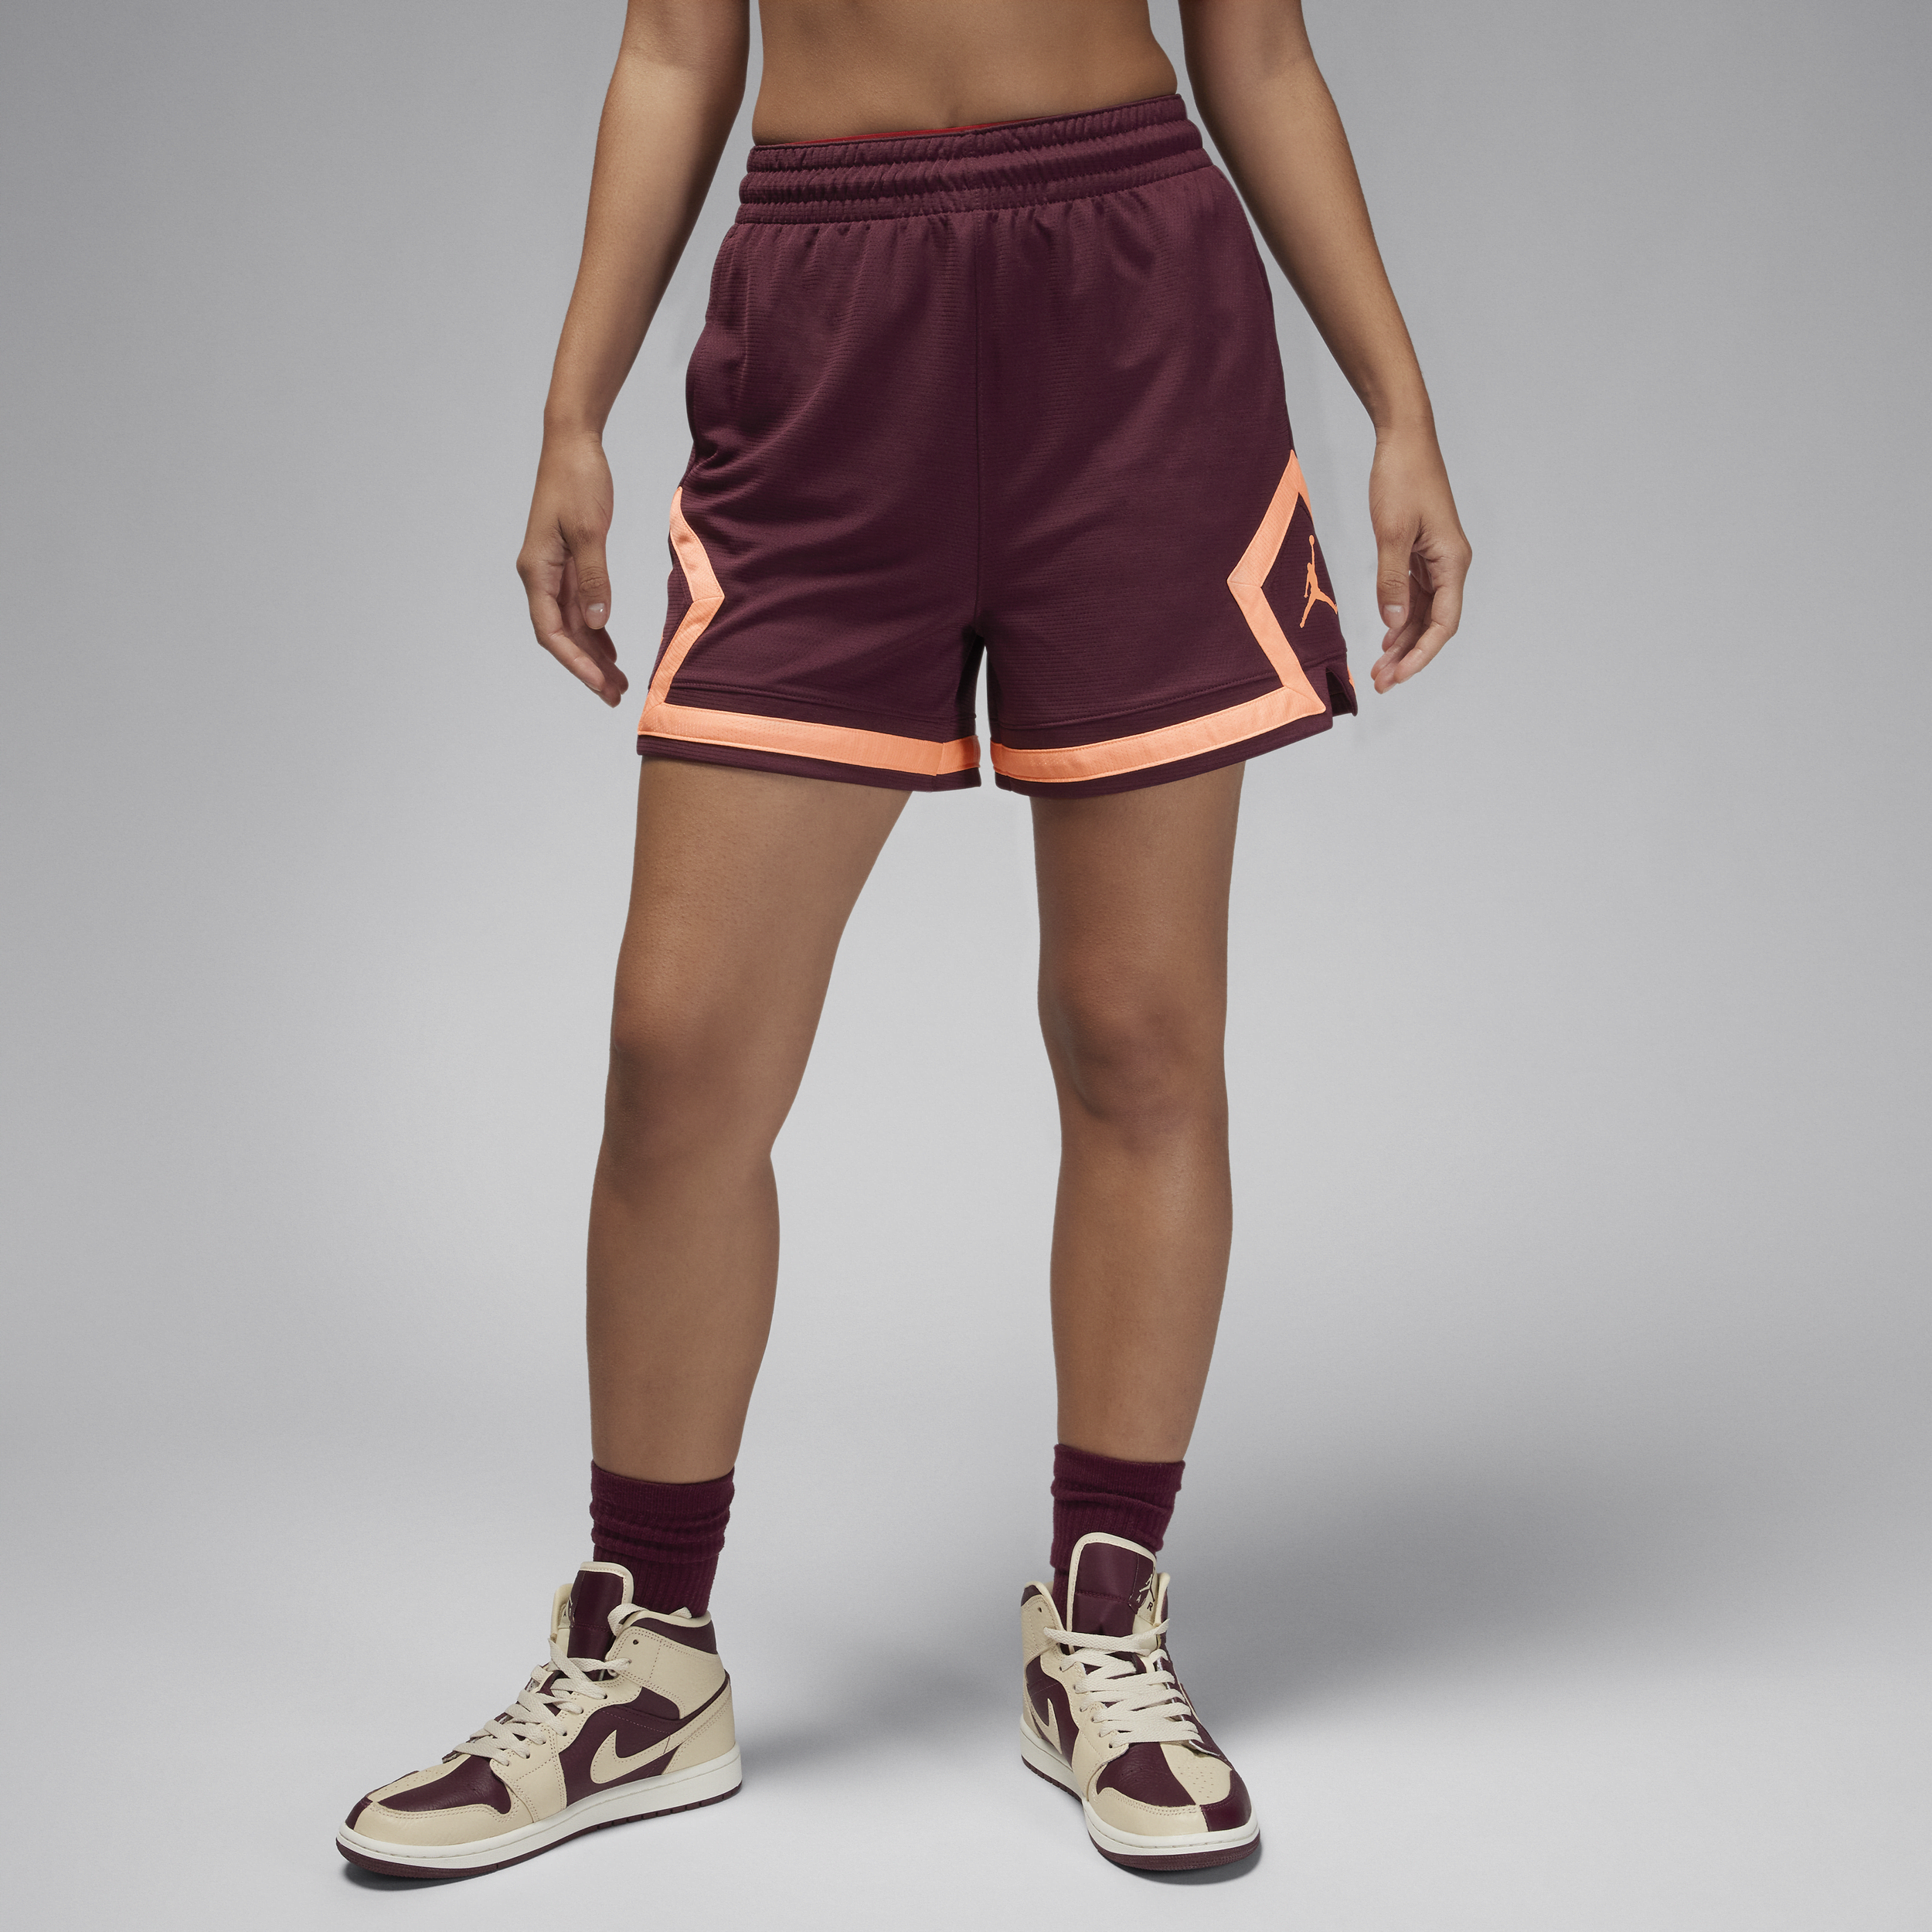 Jordan Sport Diamond-shorts (10 cm) til kvinder - rød